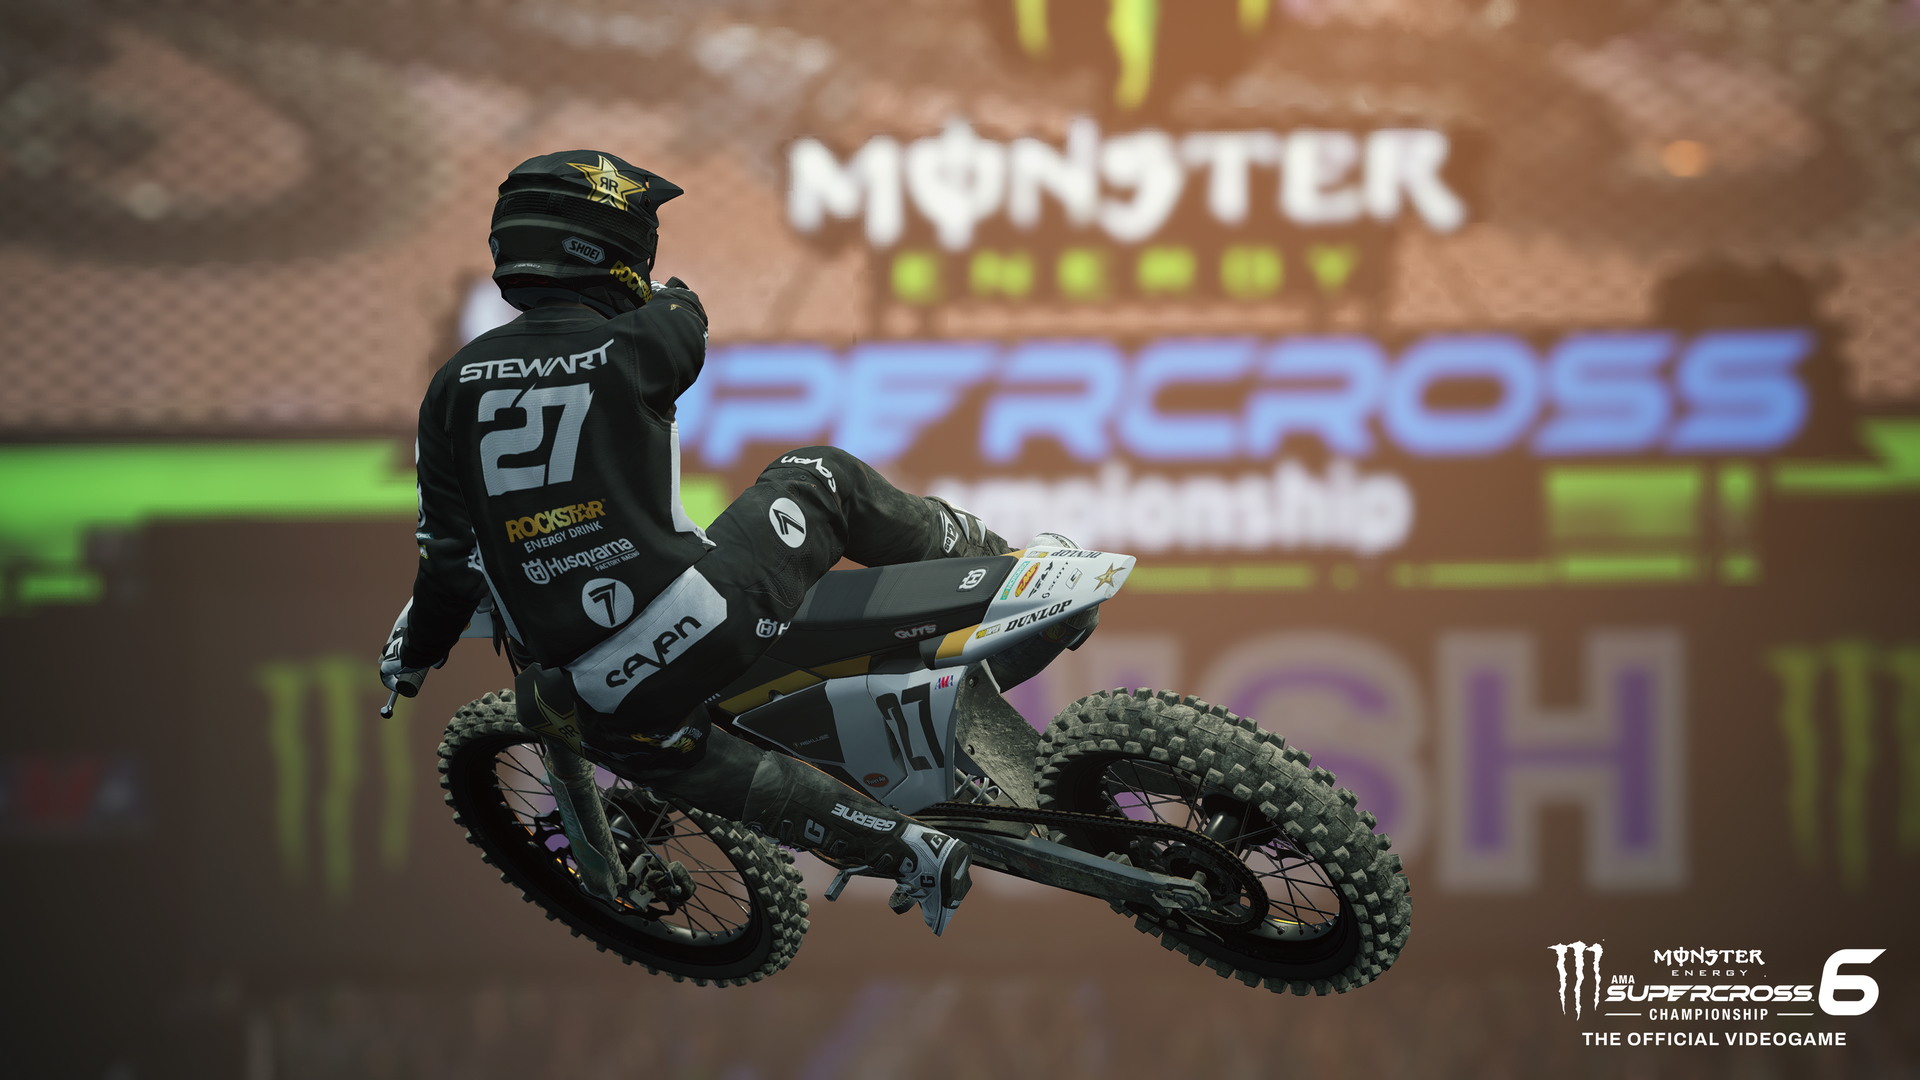 Monster Energy Supercross 6 - The Official Videogame - screenshot 6